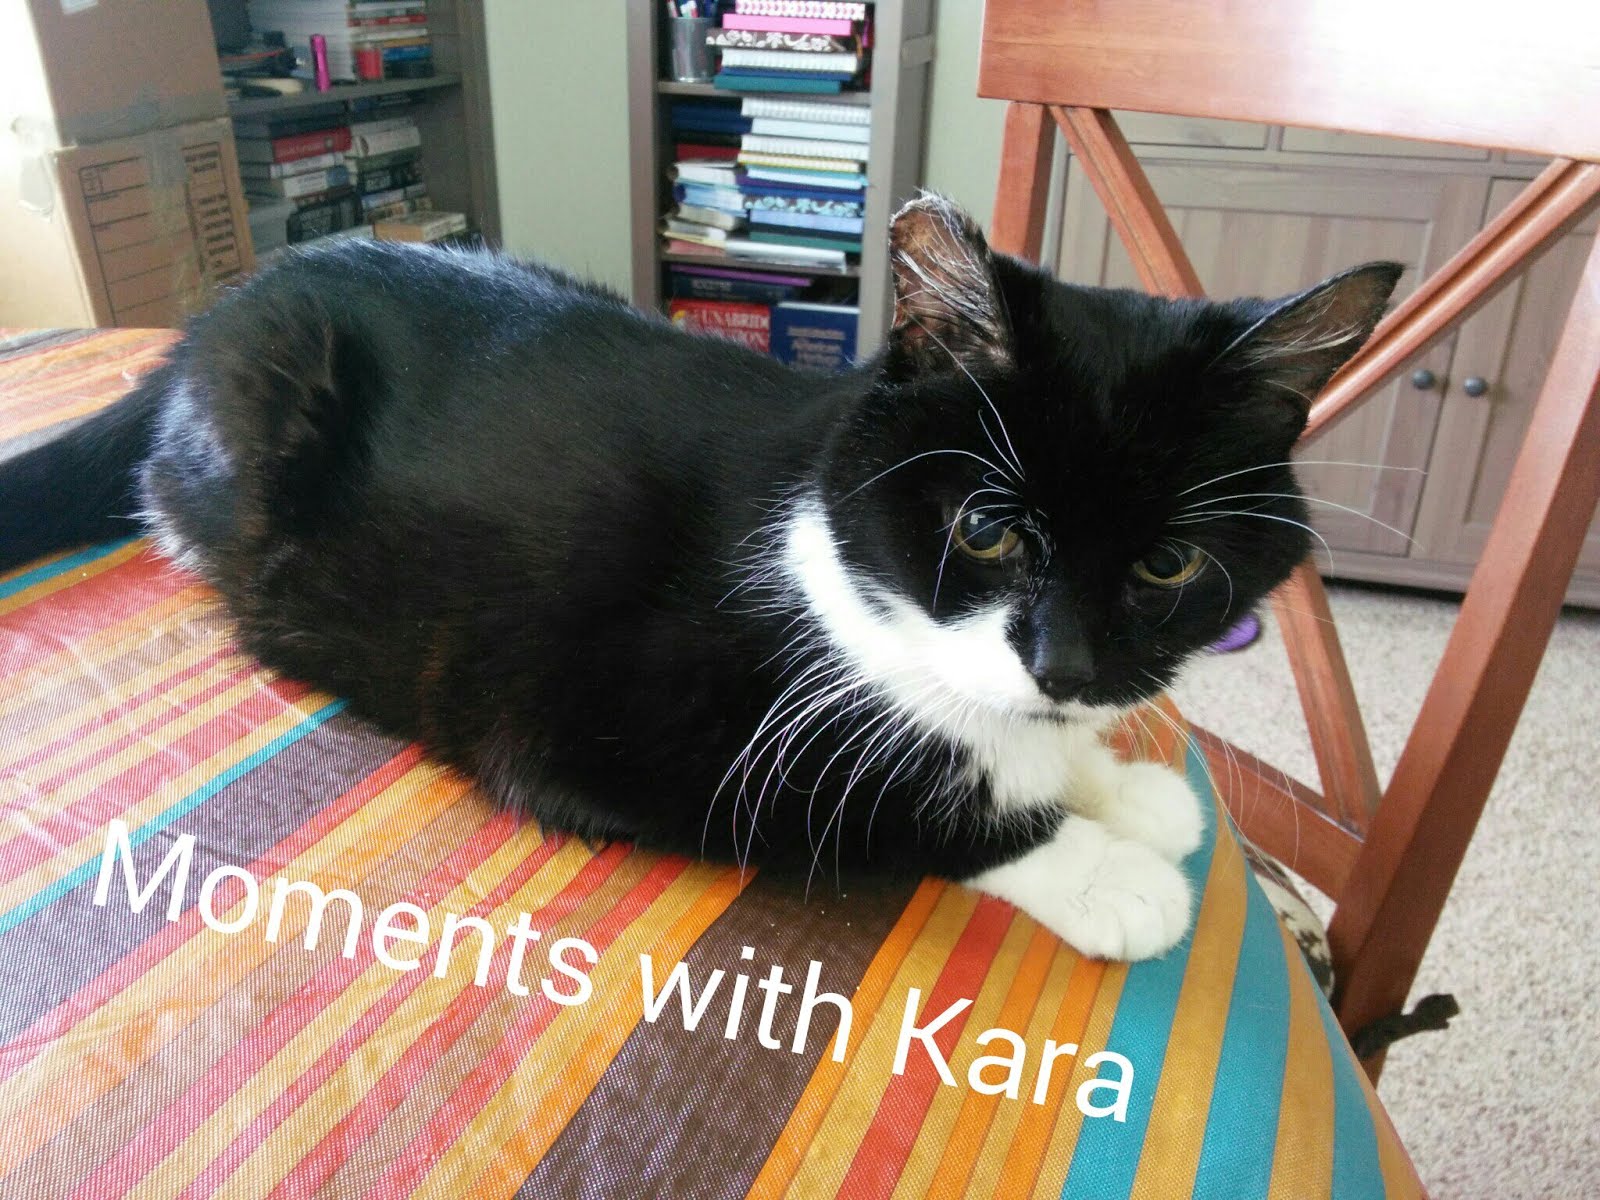 Moments with Kara